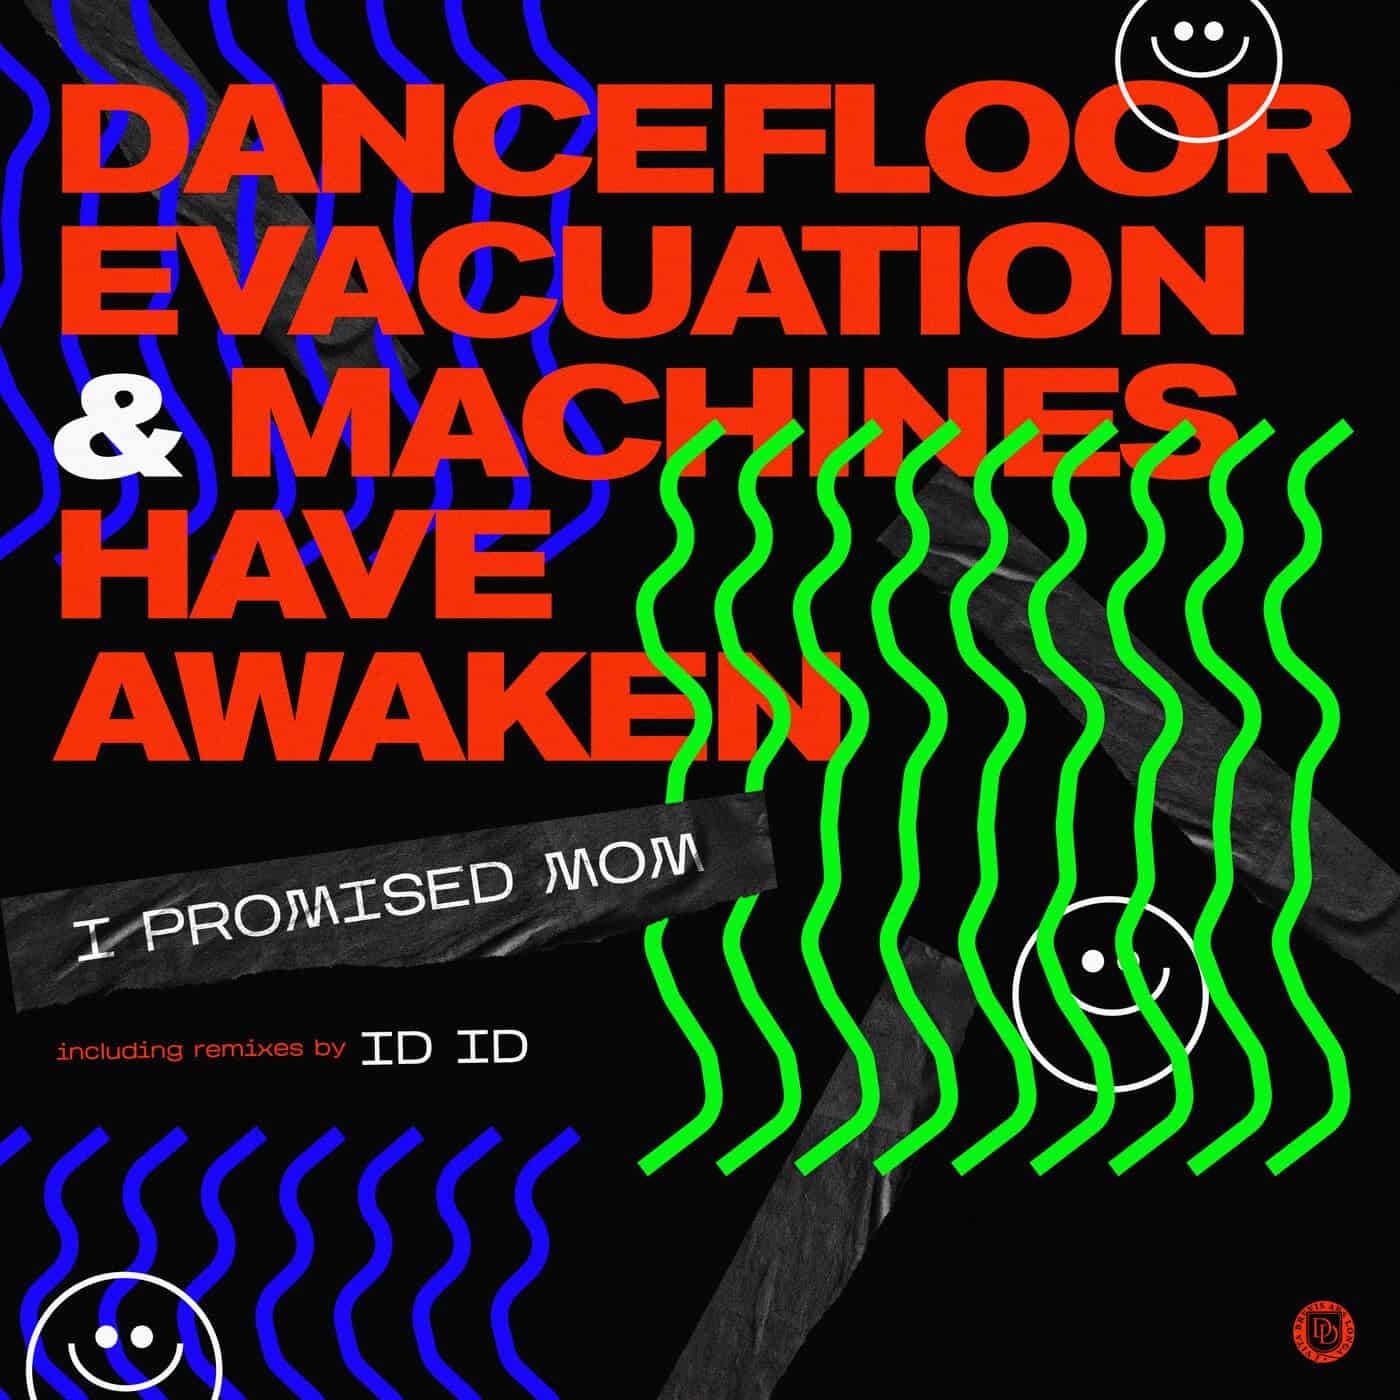 image cover: I Promised Mom - Dancefloor Evacuation & Machines Have Awaken / DD246